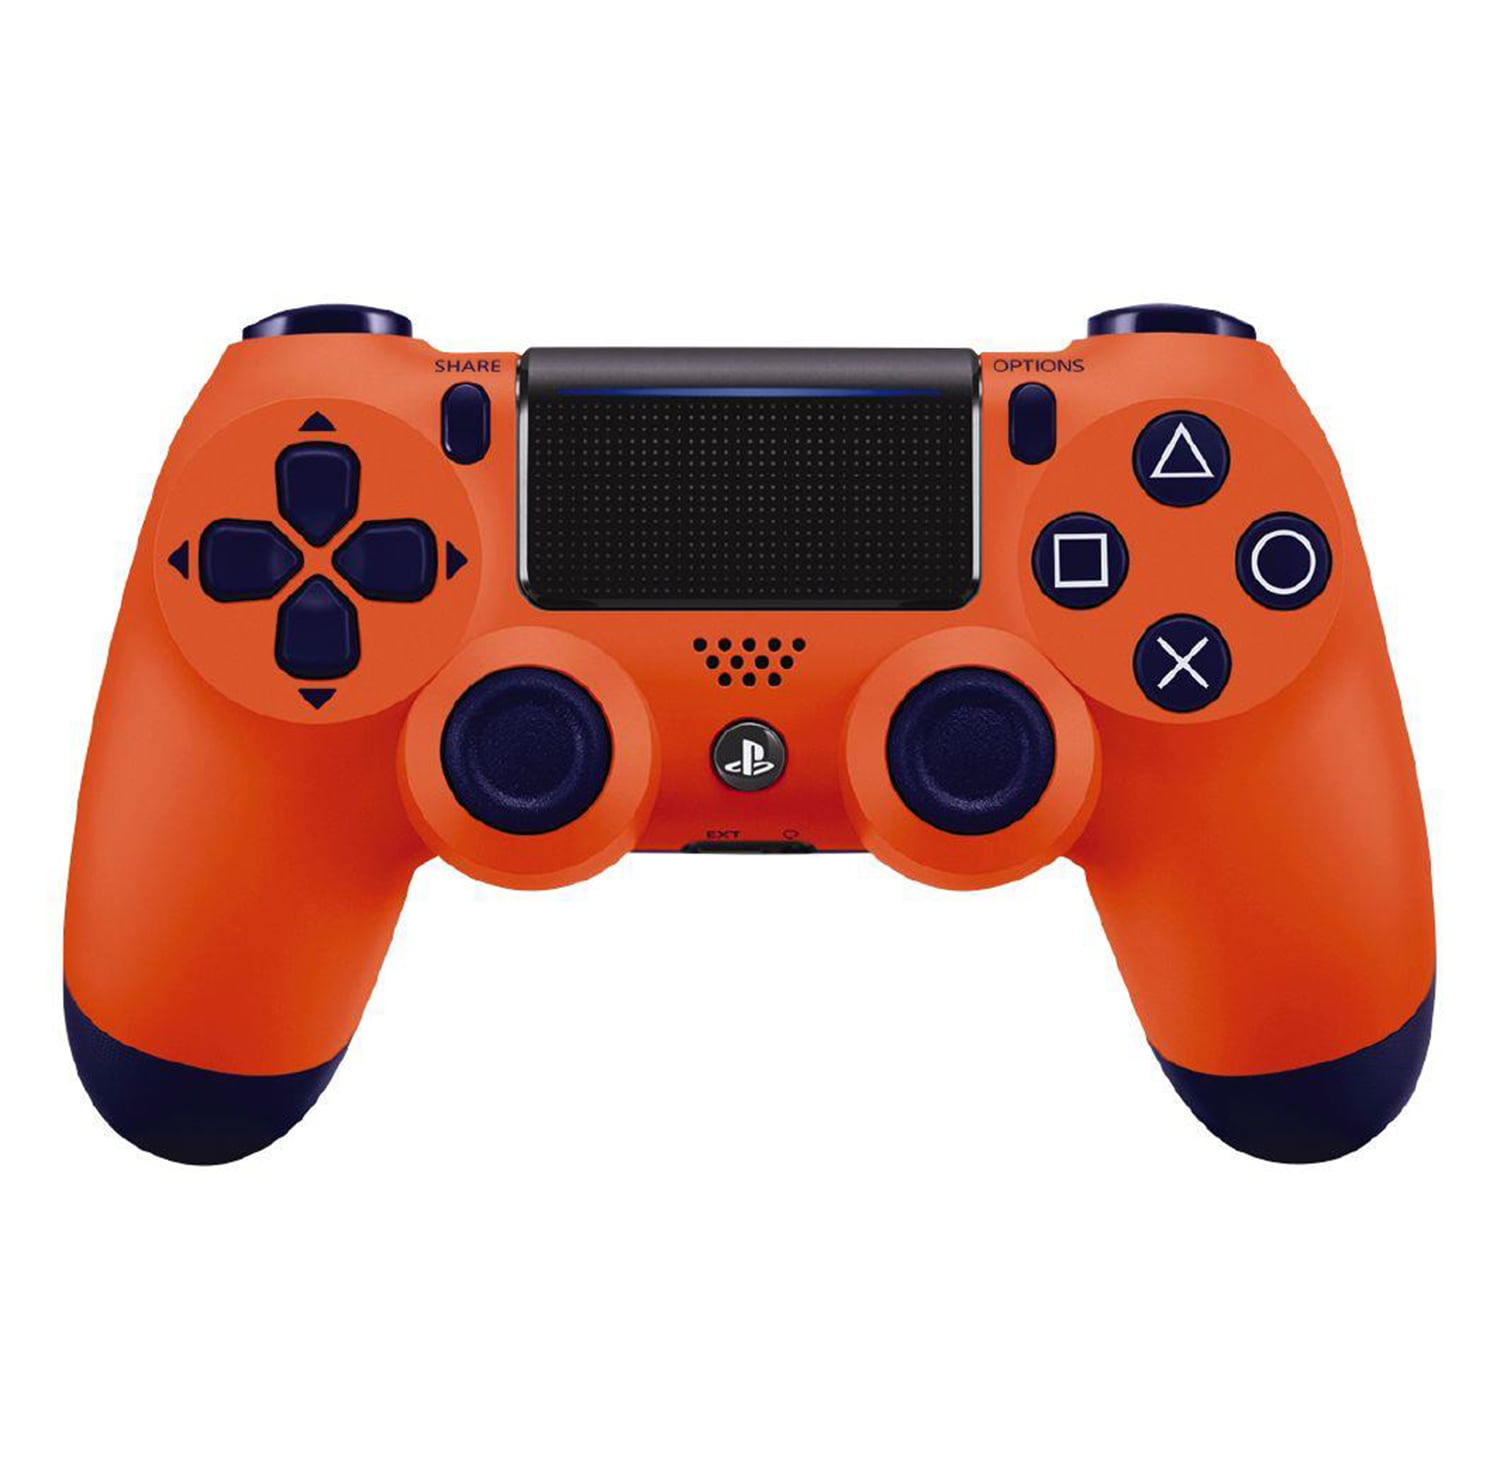 Sony PS4 Dualshock Wireless Controller - Sunset Orange Walmart.com